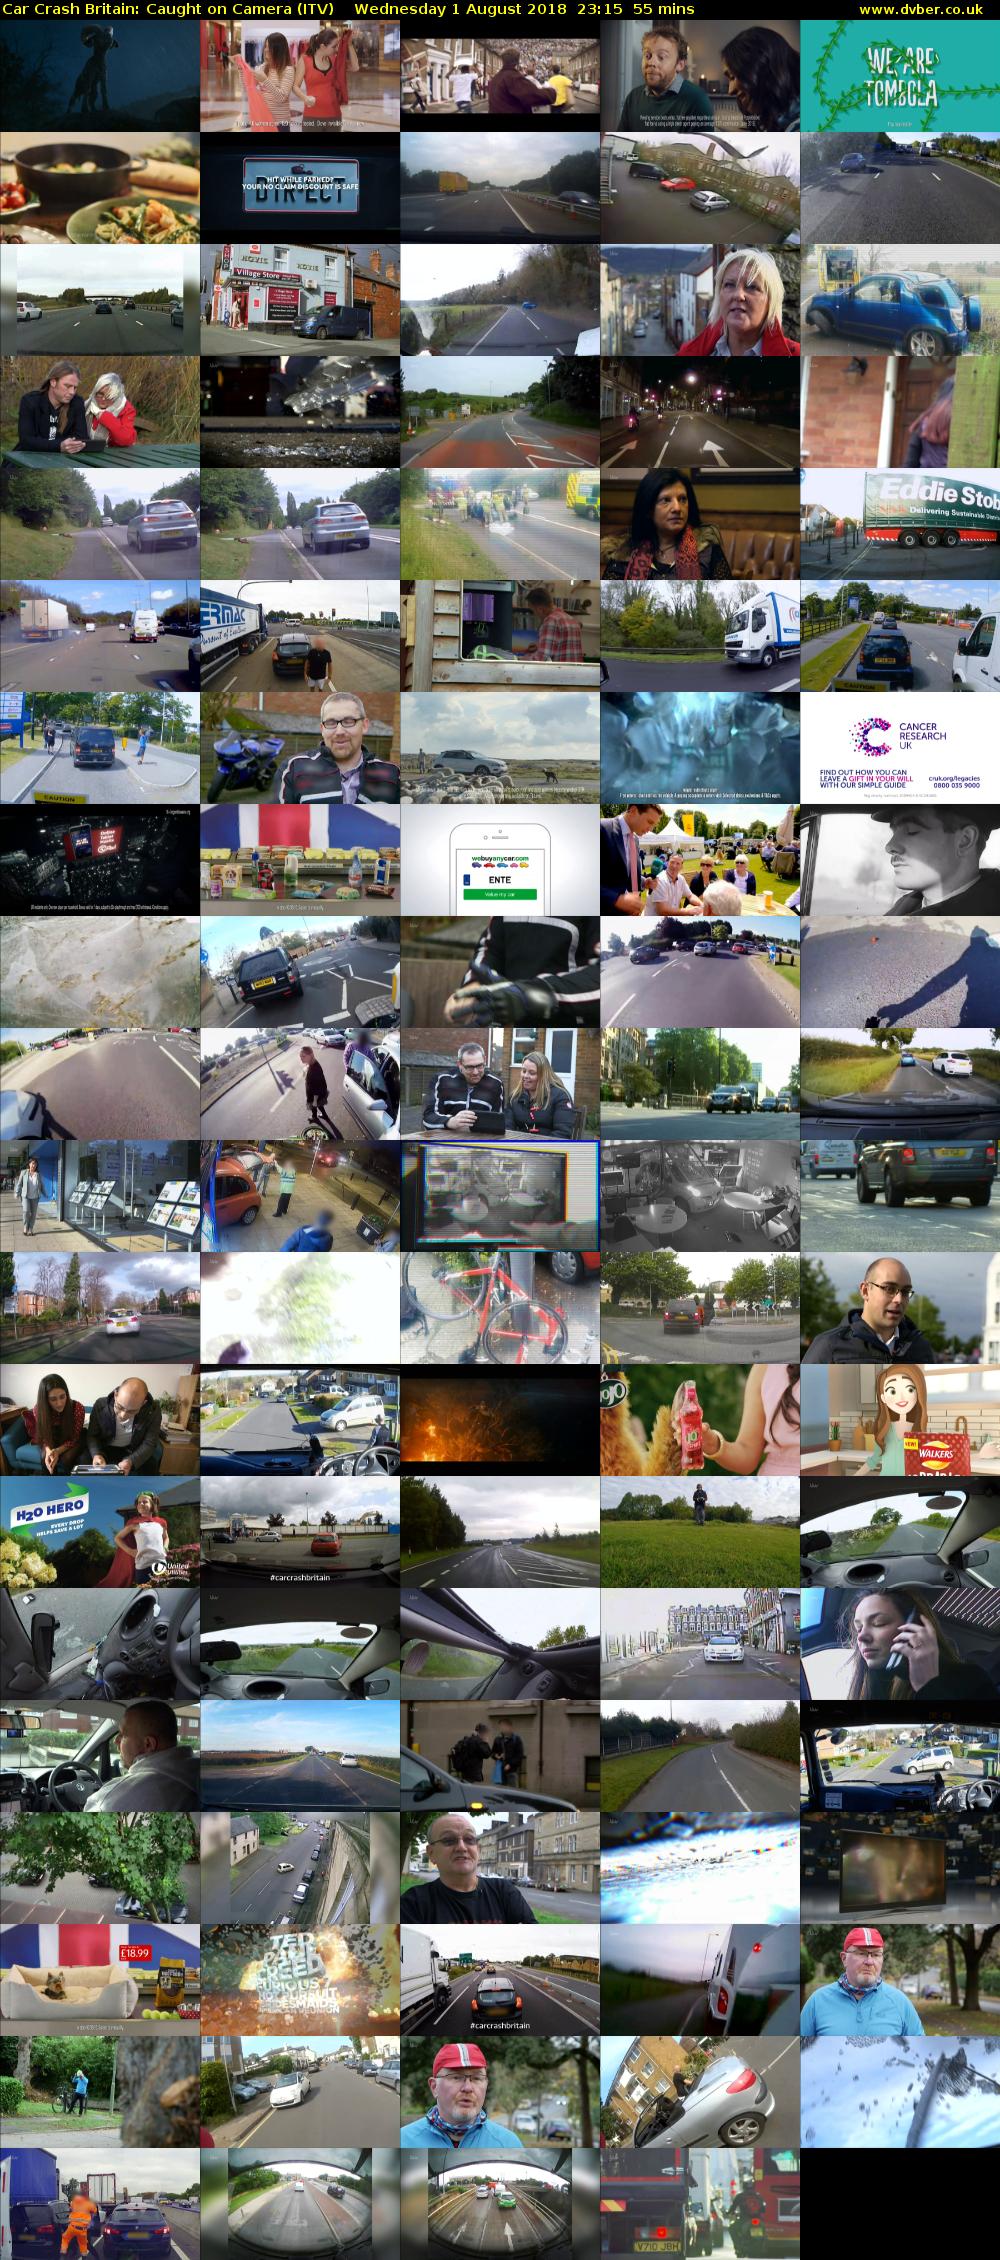 Car Crash Britain: Caught on Camera (ITV) Wednesday 1 August 2018 23:15 - 00:10